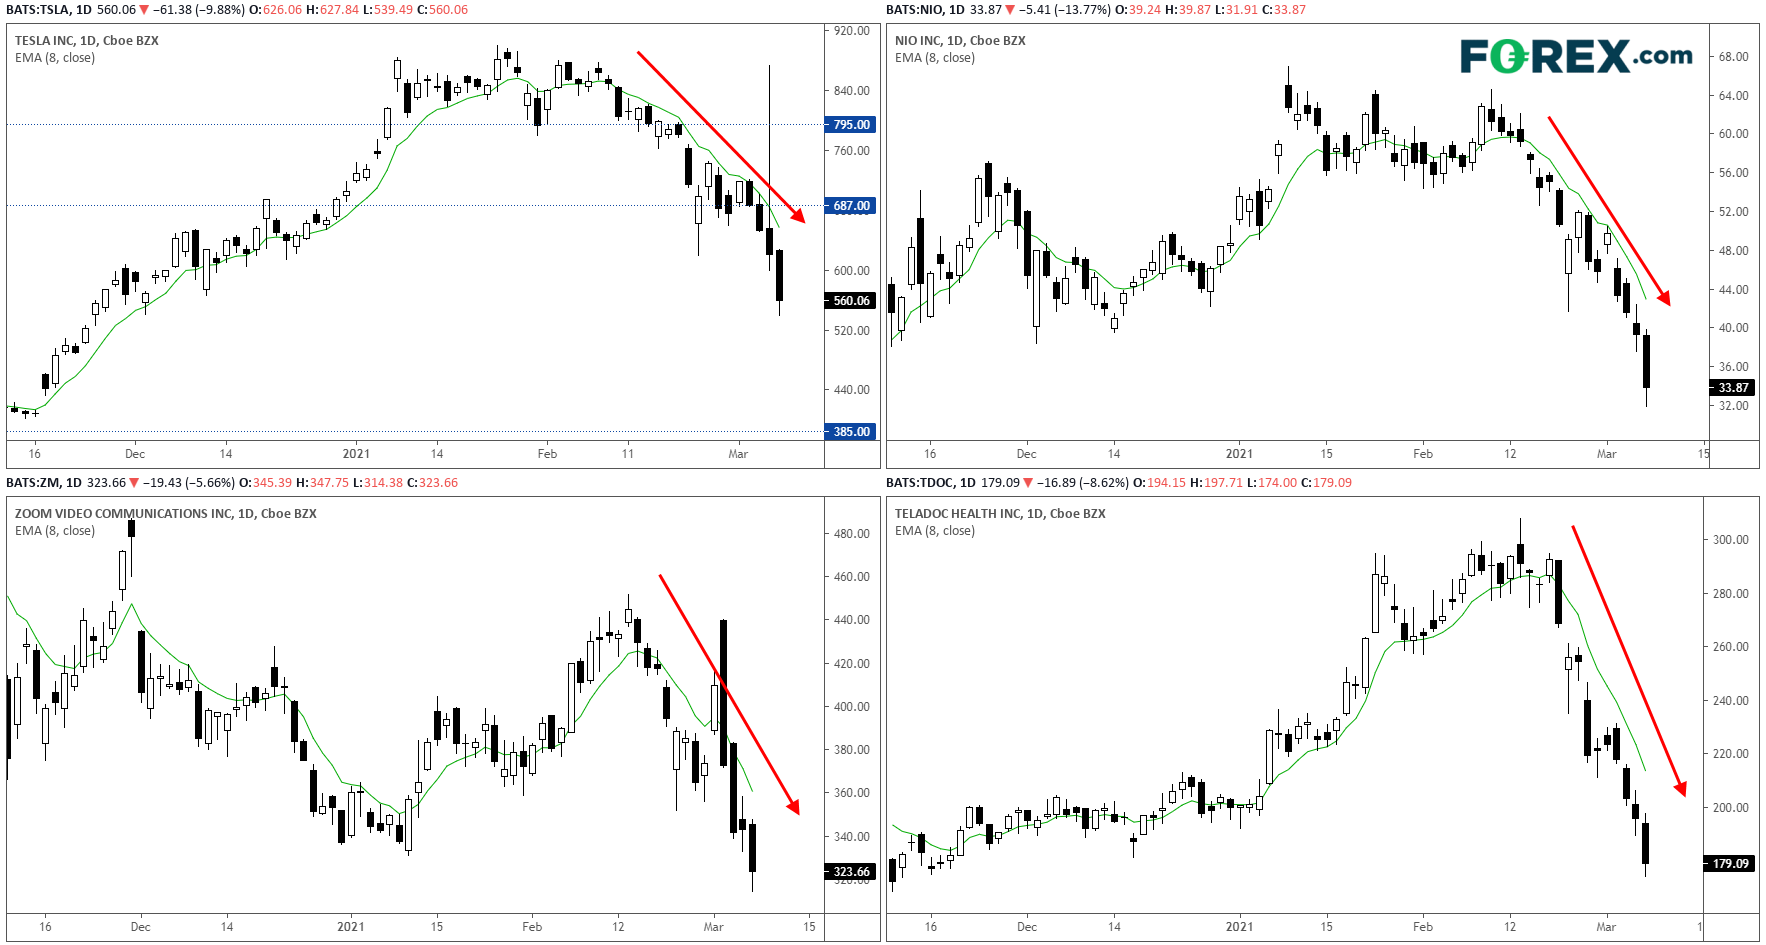 4 Stocks Charts